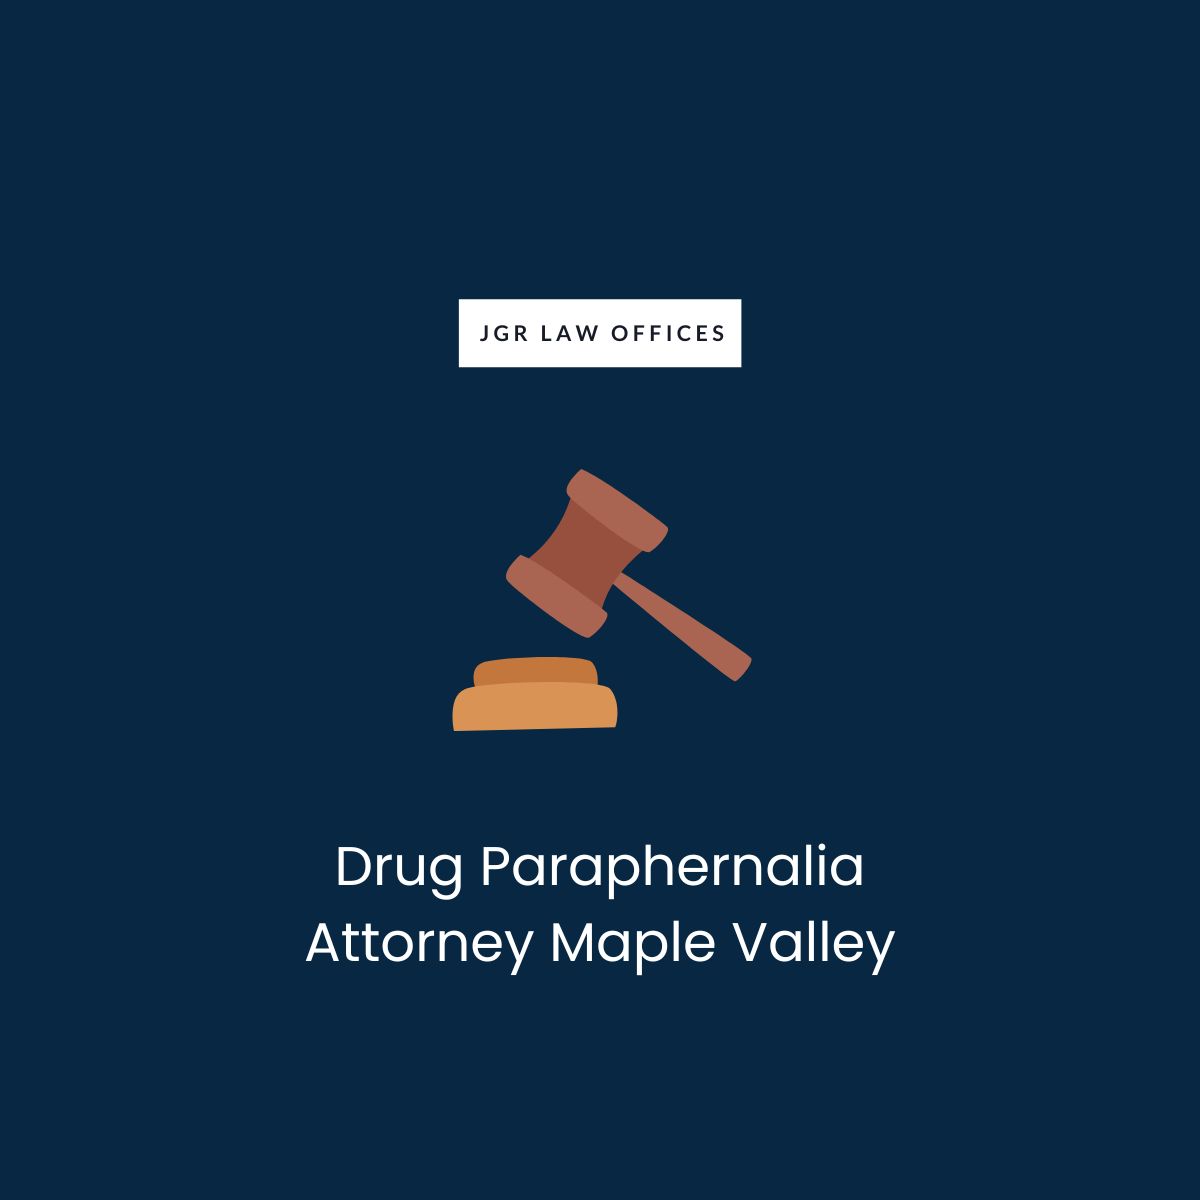 Drug Paraphernalia Lawyer Maple Valley Drug Paraphernalia Drug Paraphernalia